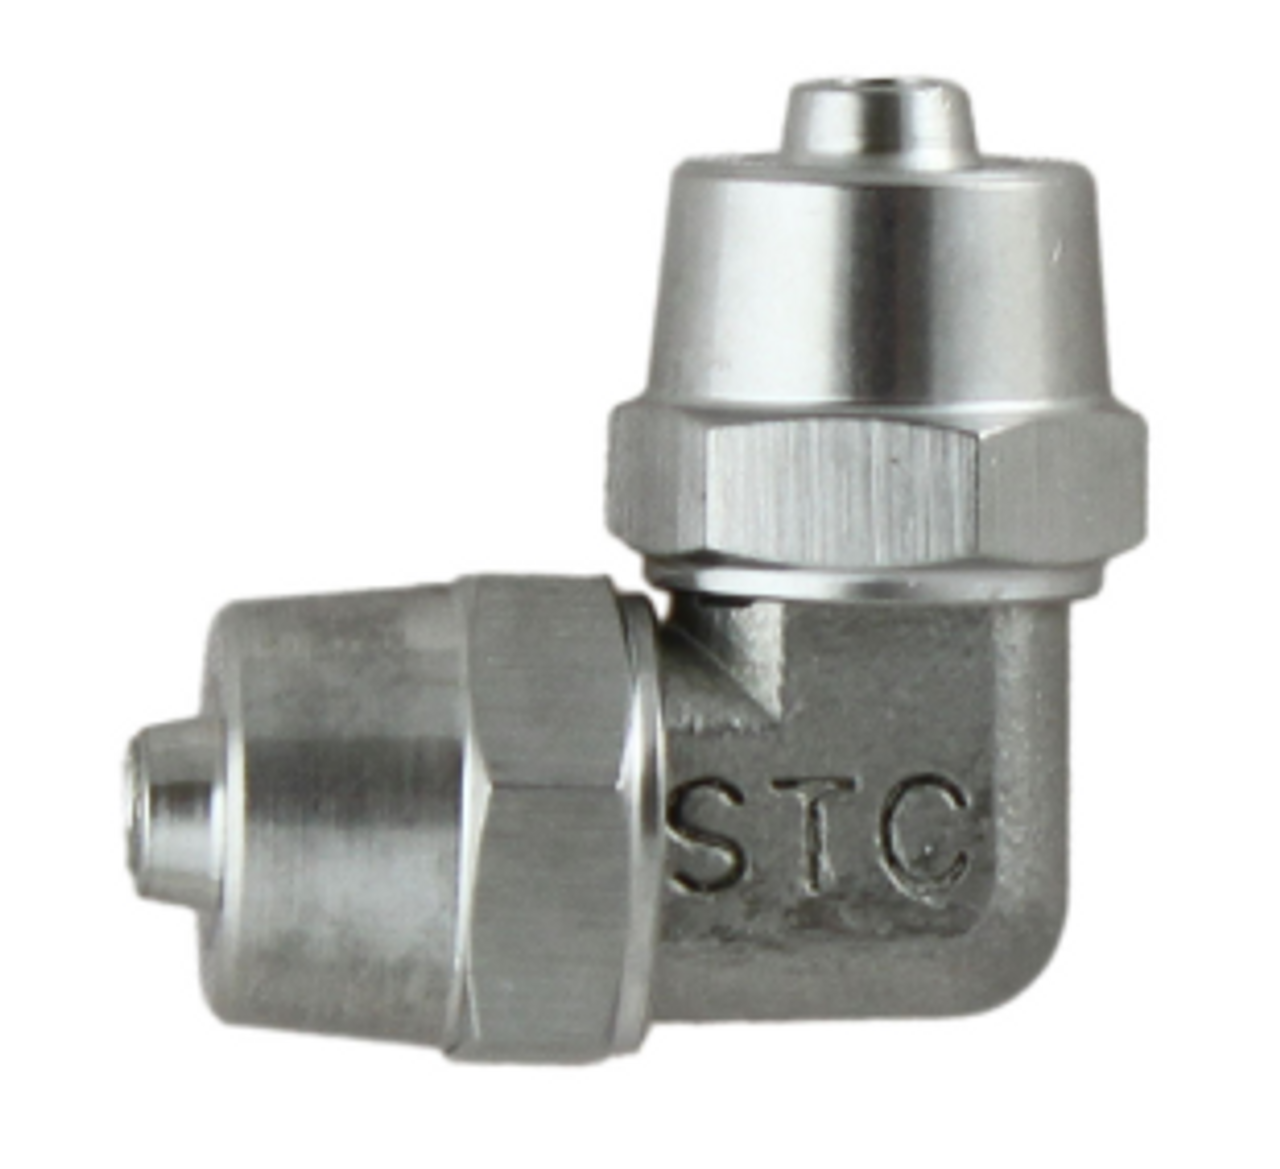 STC EUA 1/4 Elbow Union- Barb Compression Fittings